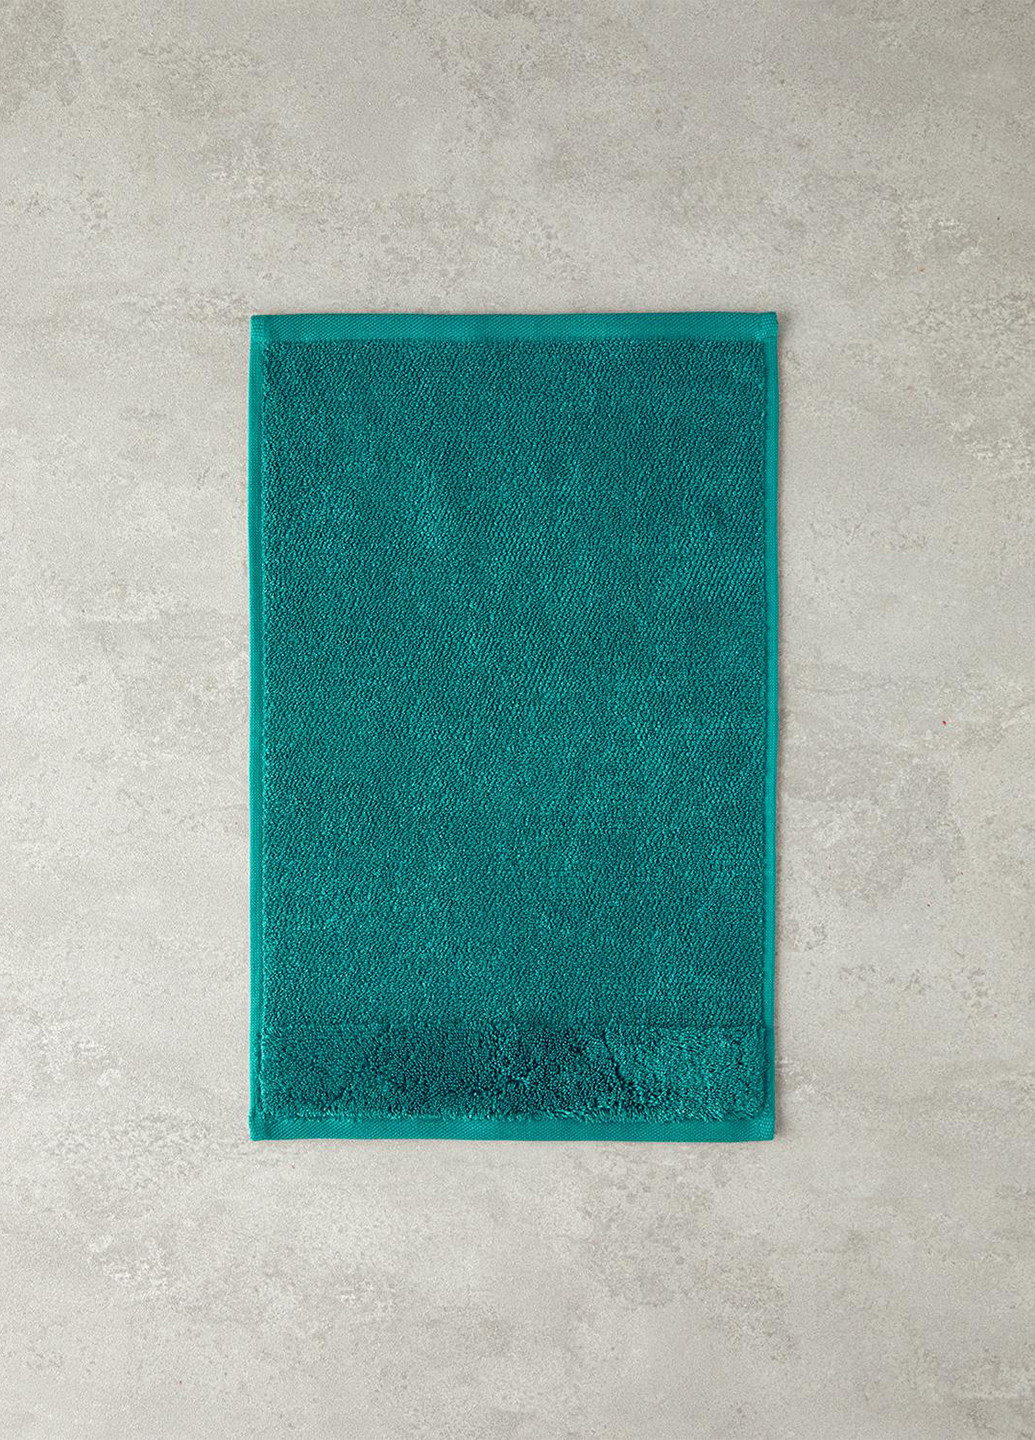 English Home полотенце для рук, 30х45 см однотонный зеленый производство - Турция